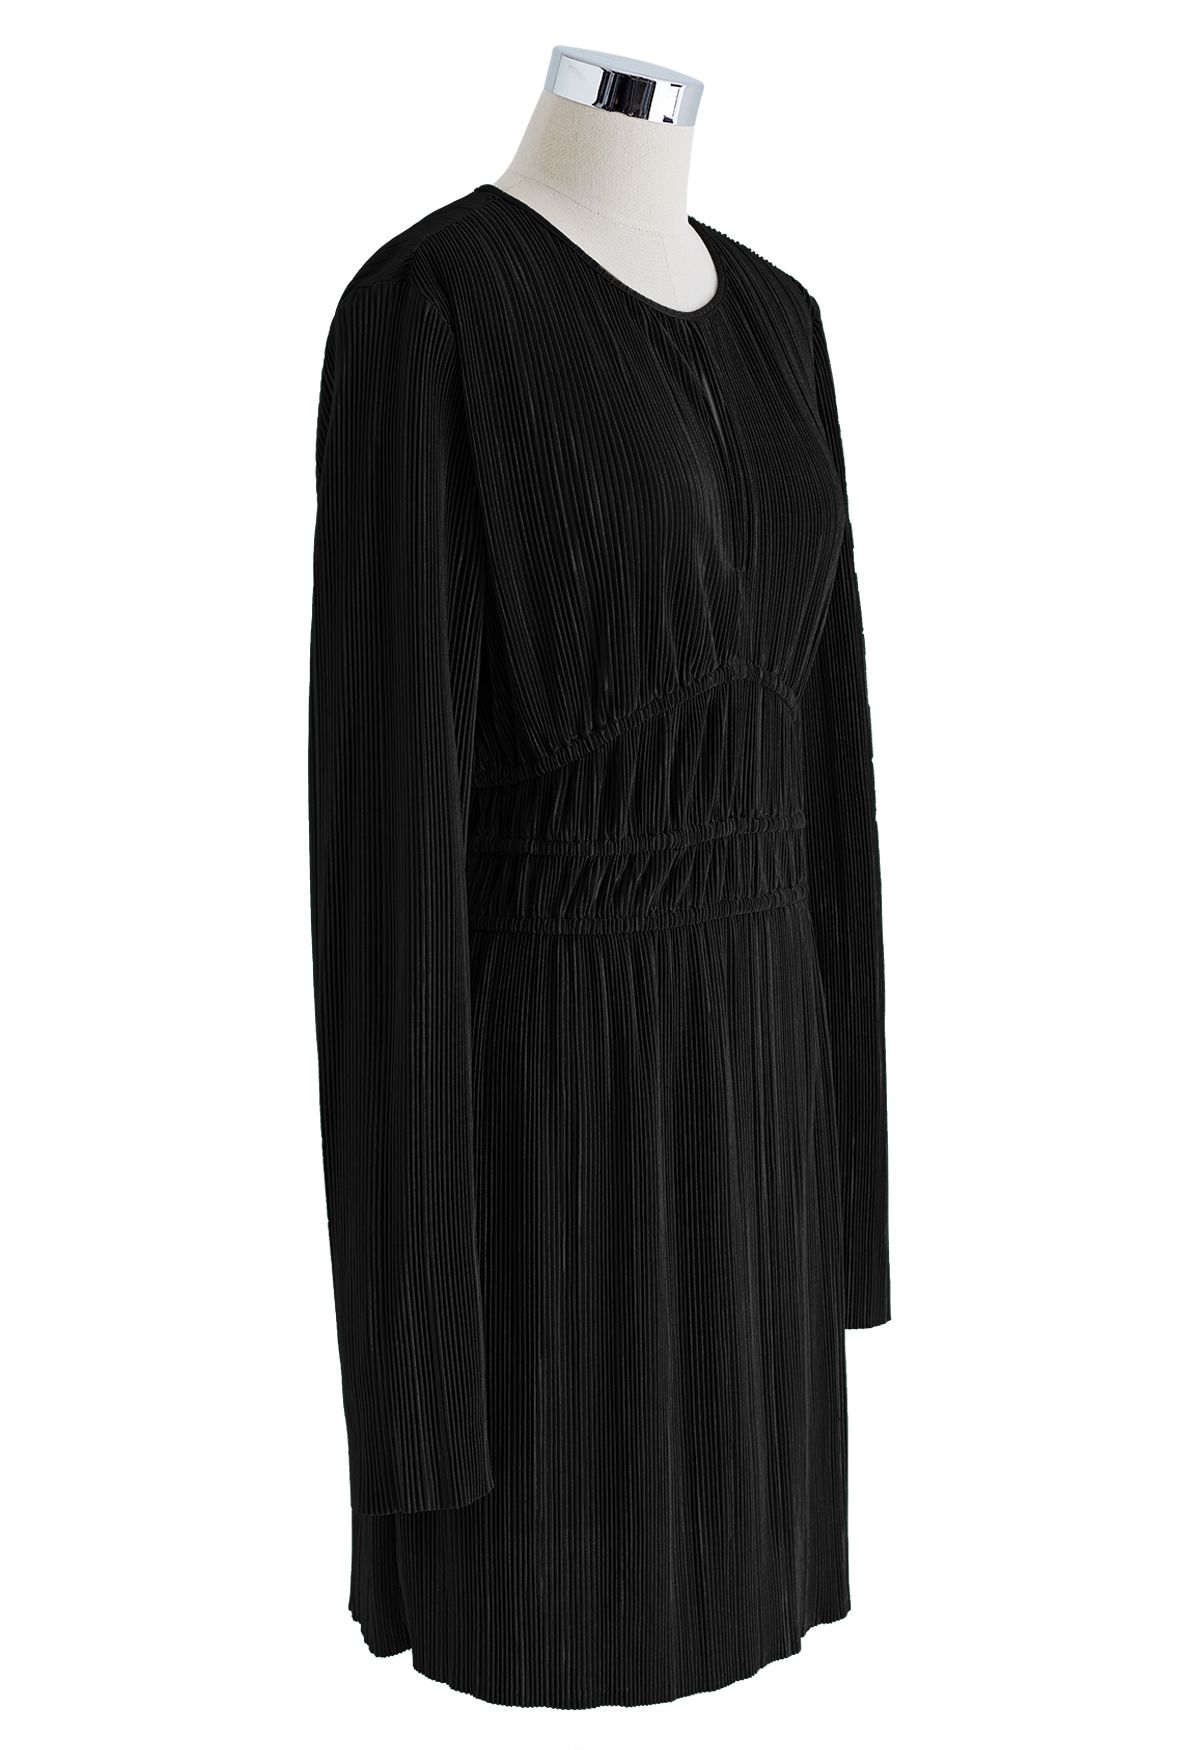 Vestido plissado corte bruto recortado em preto